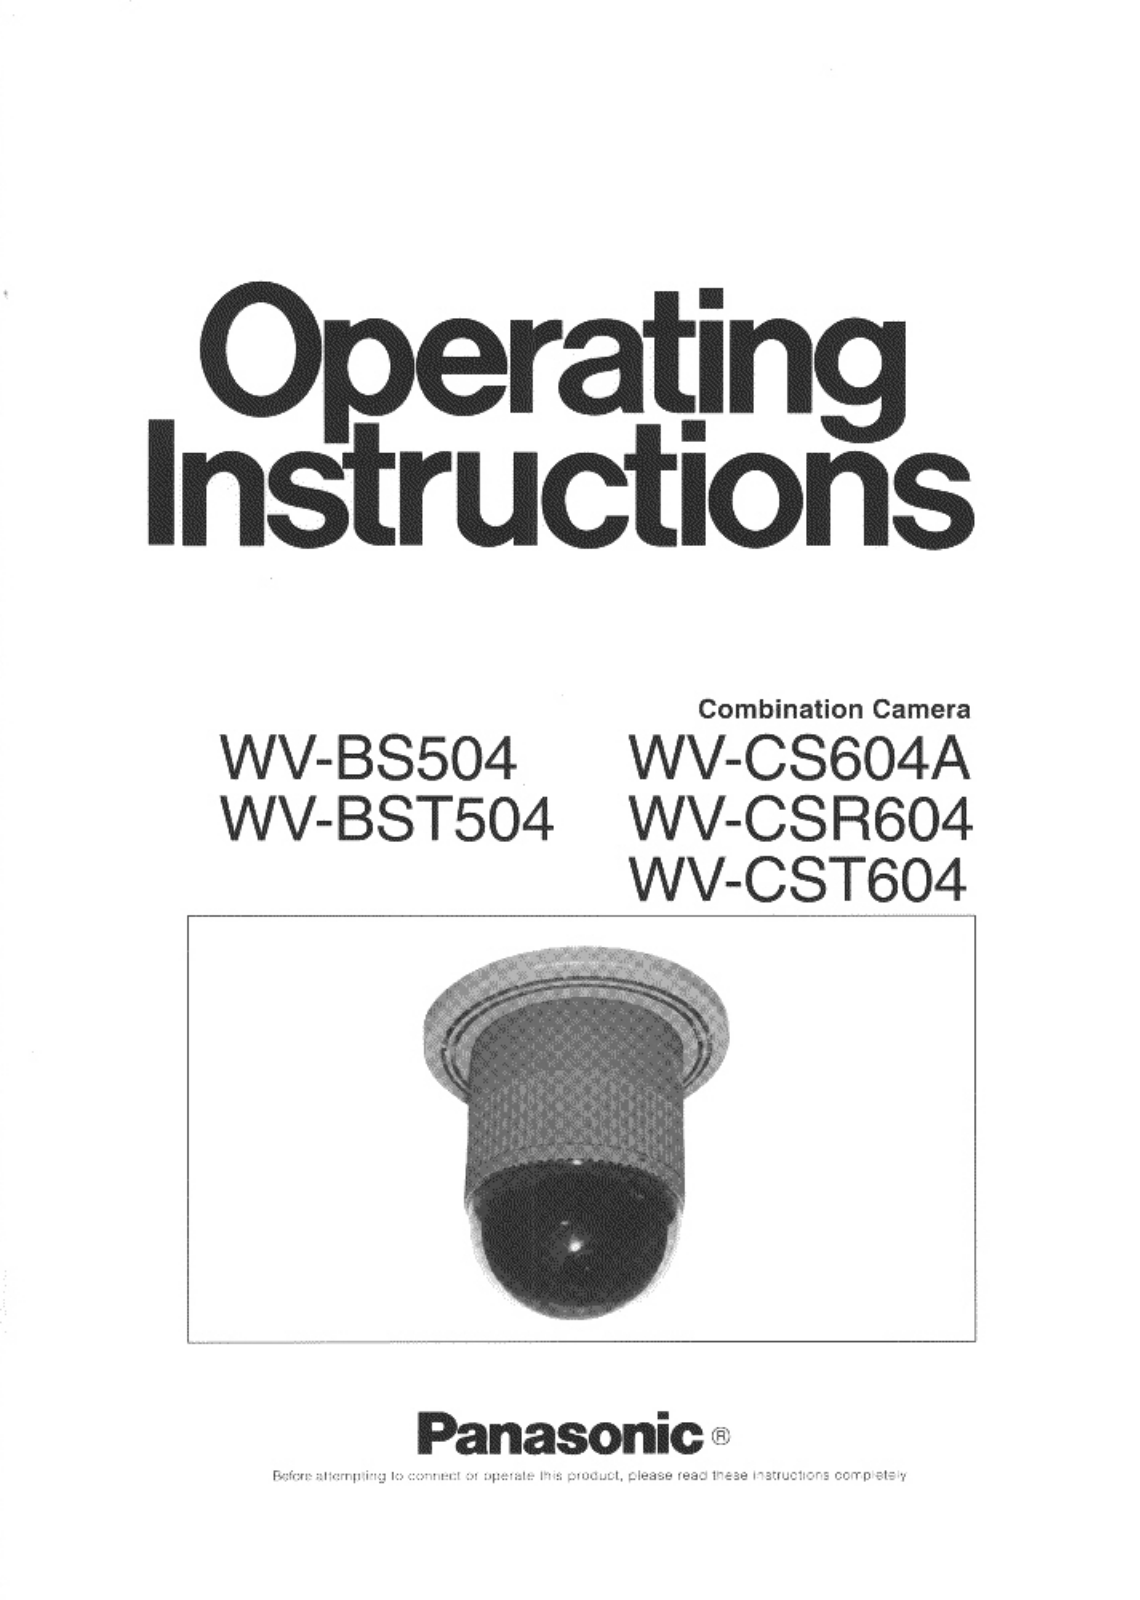 Panasonic WV-CSR604, WV-CST604, WV-CS604A, WV-BST504 User Manual